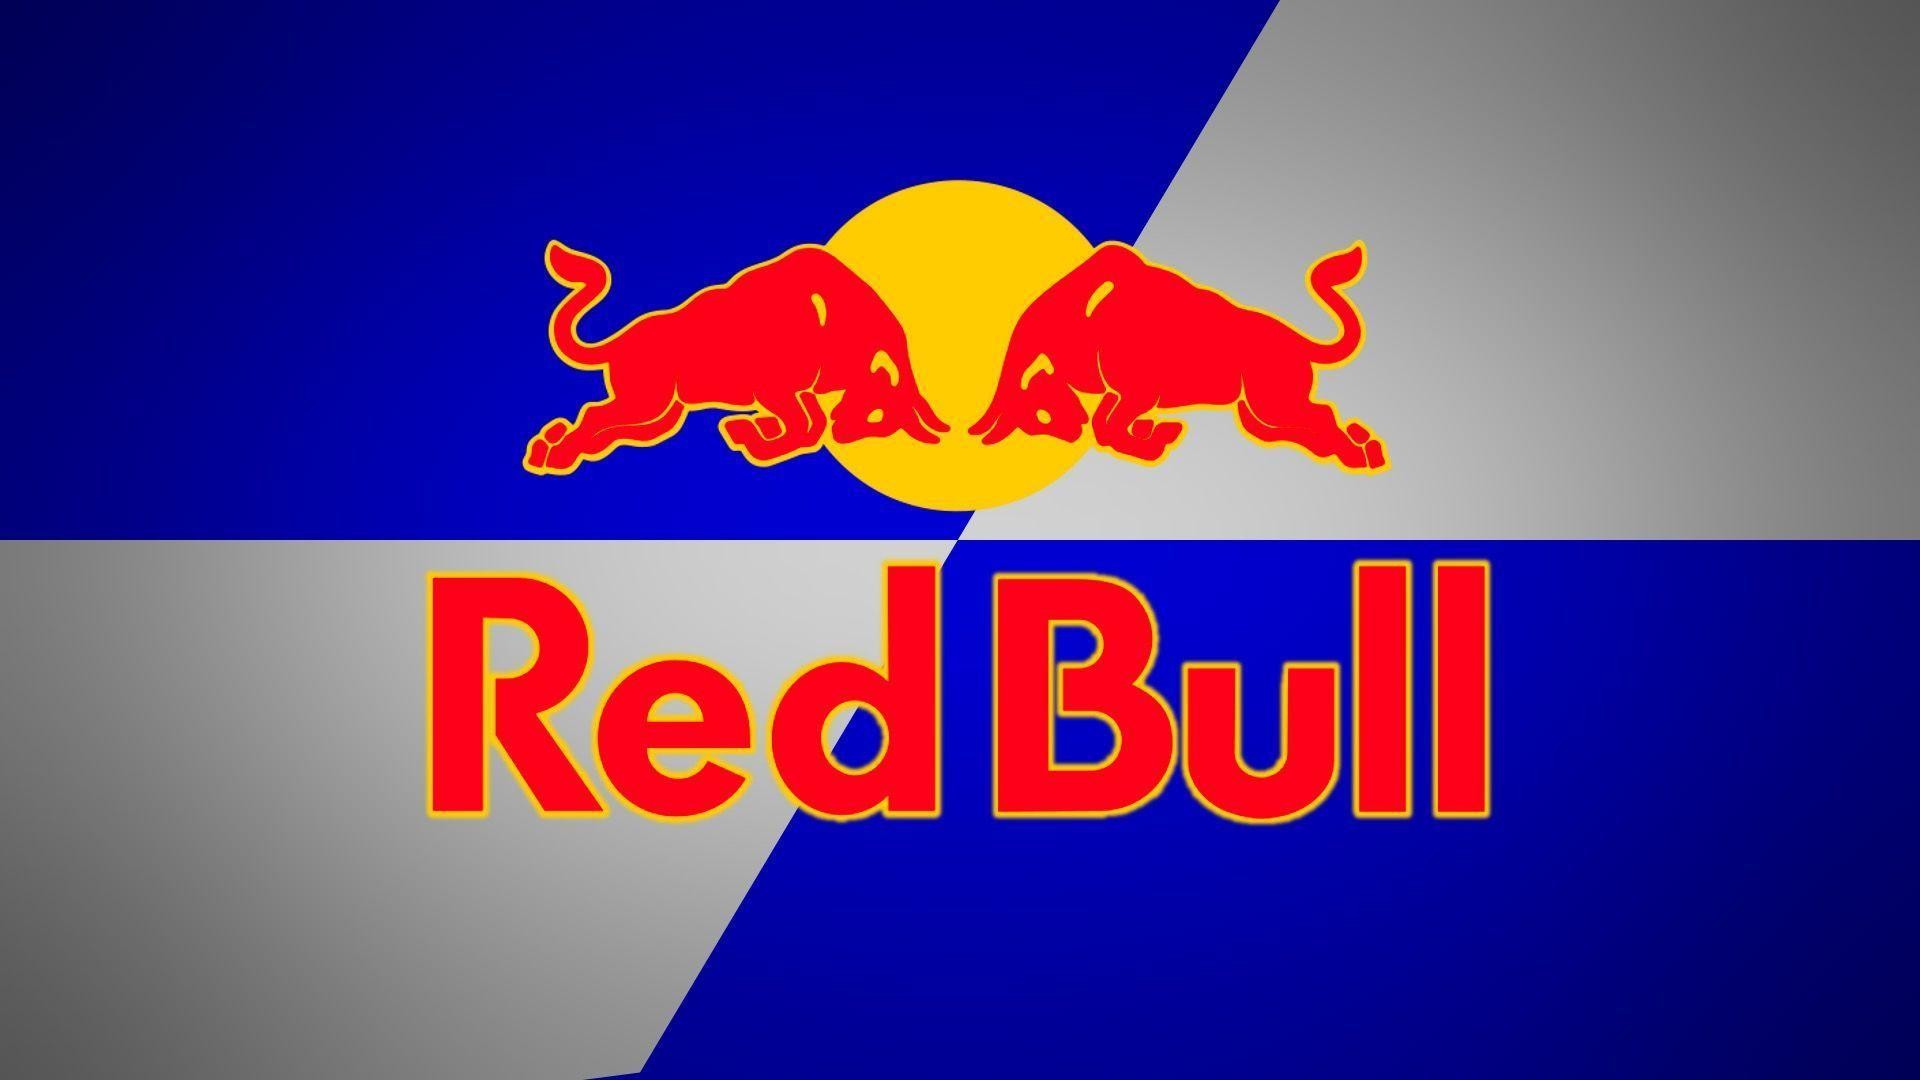 1920x1080 Red Bull Logo Pics